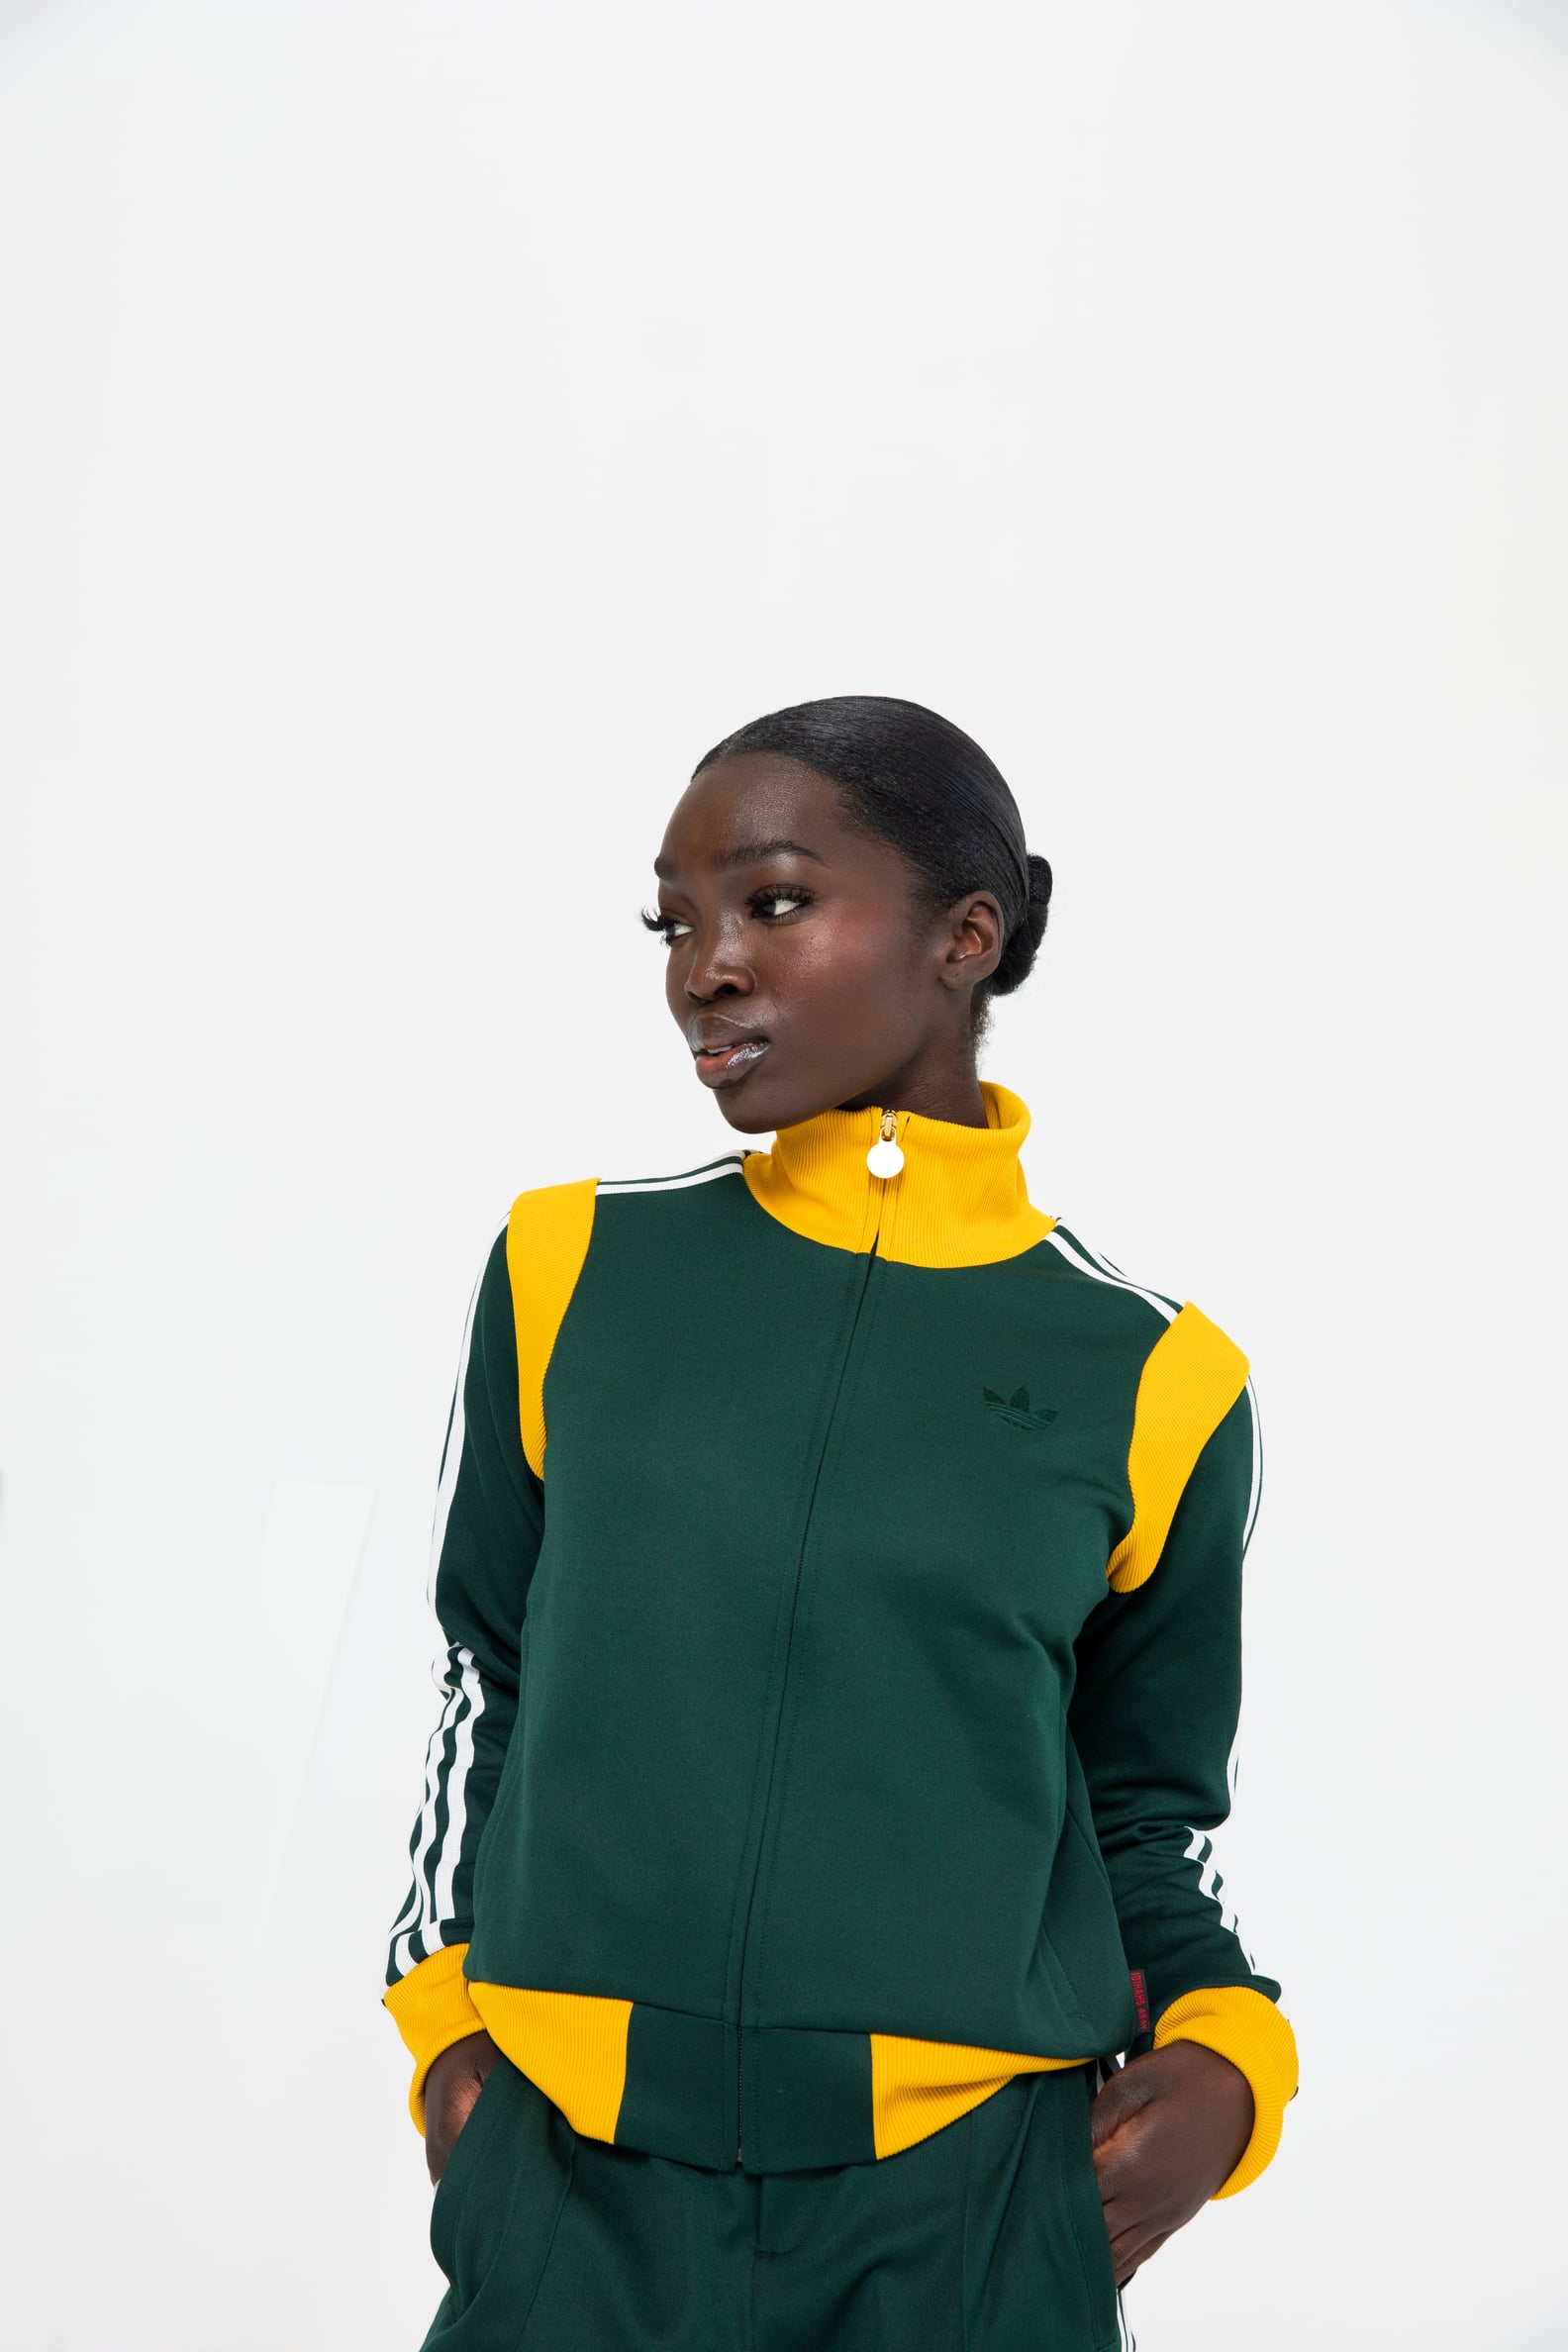 Yara Shahidi Is Coming Out With an Adidas Collaboration | POPSUGAR Fashion